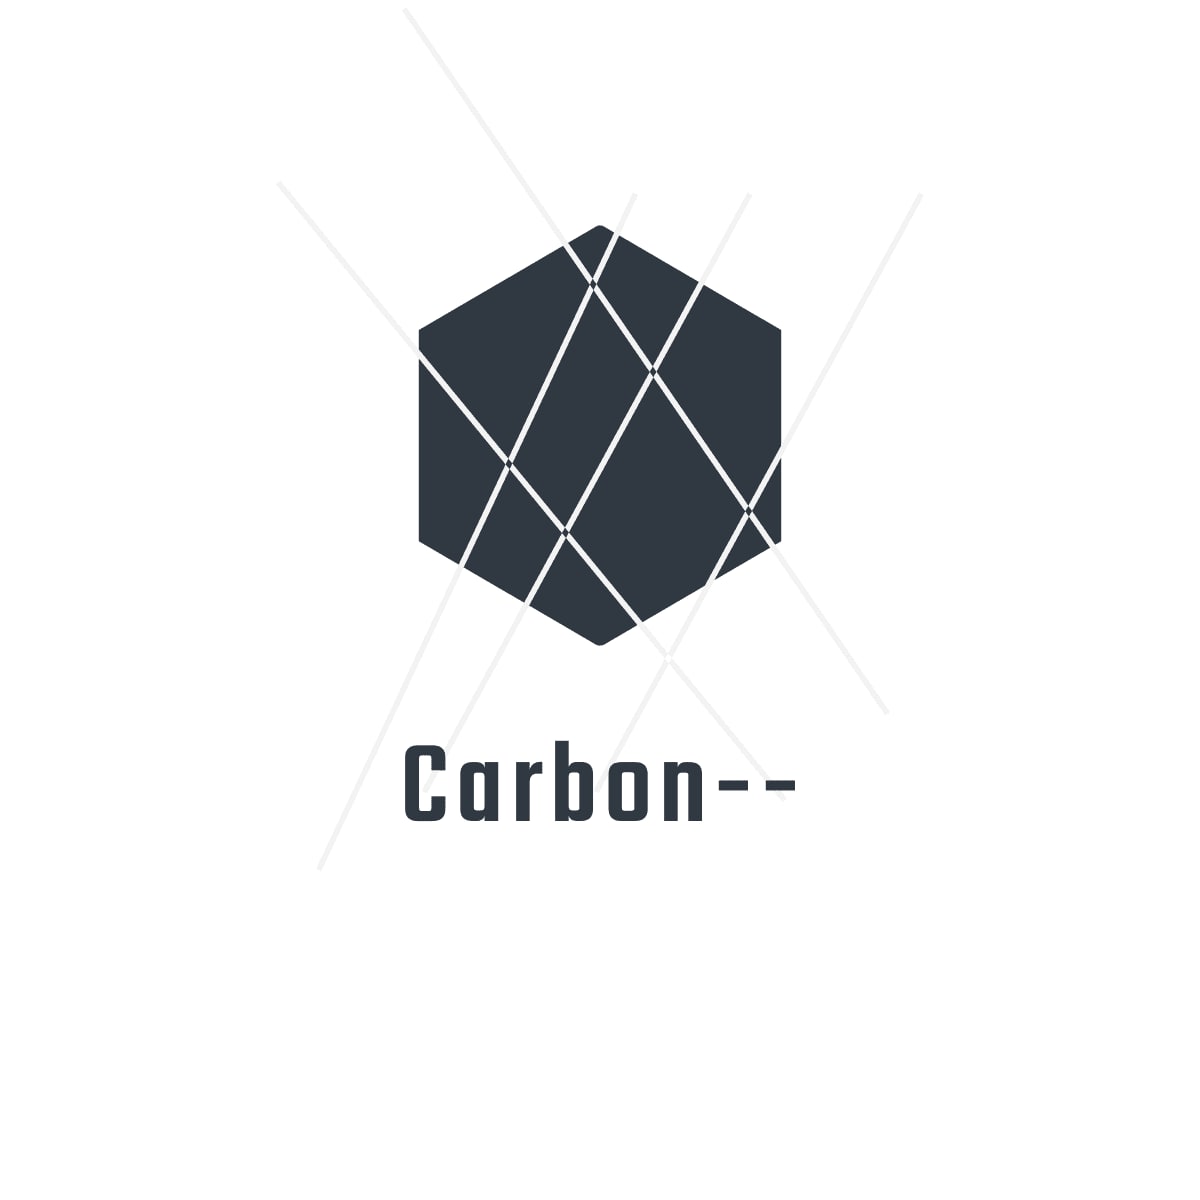 FYP Carbon-- Logo.jpg